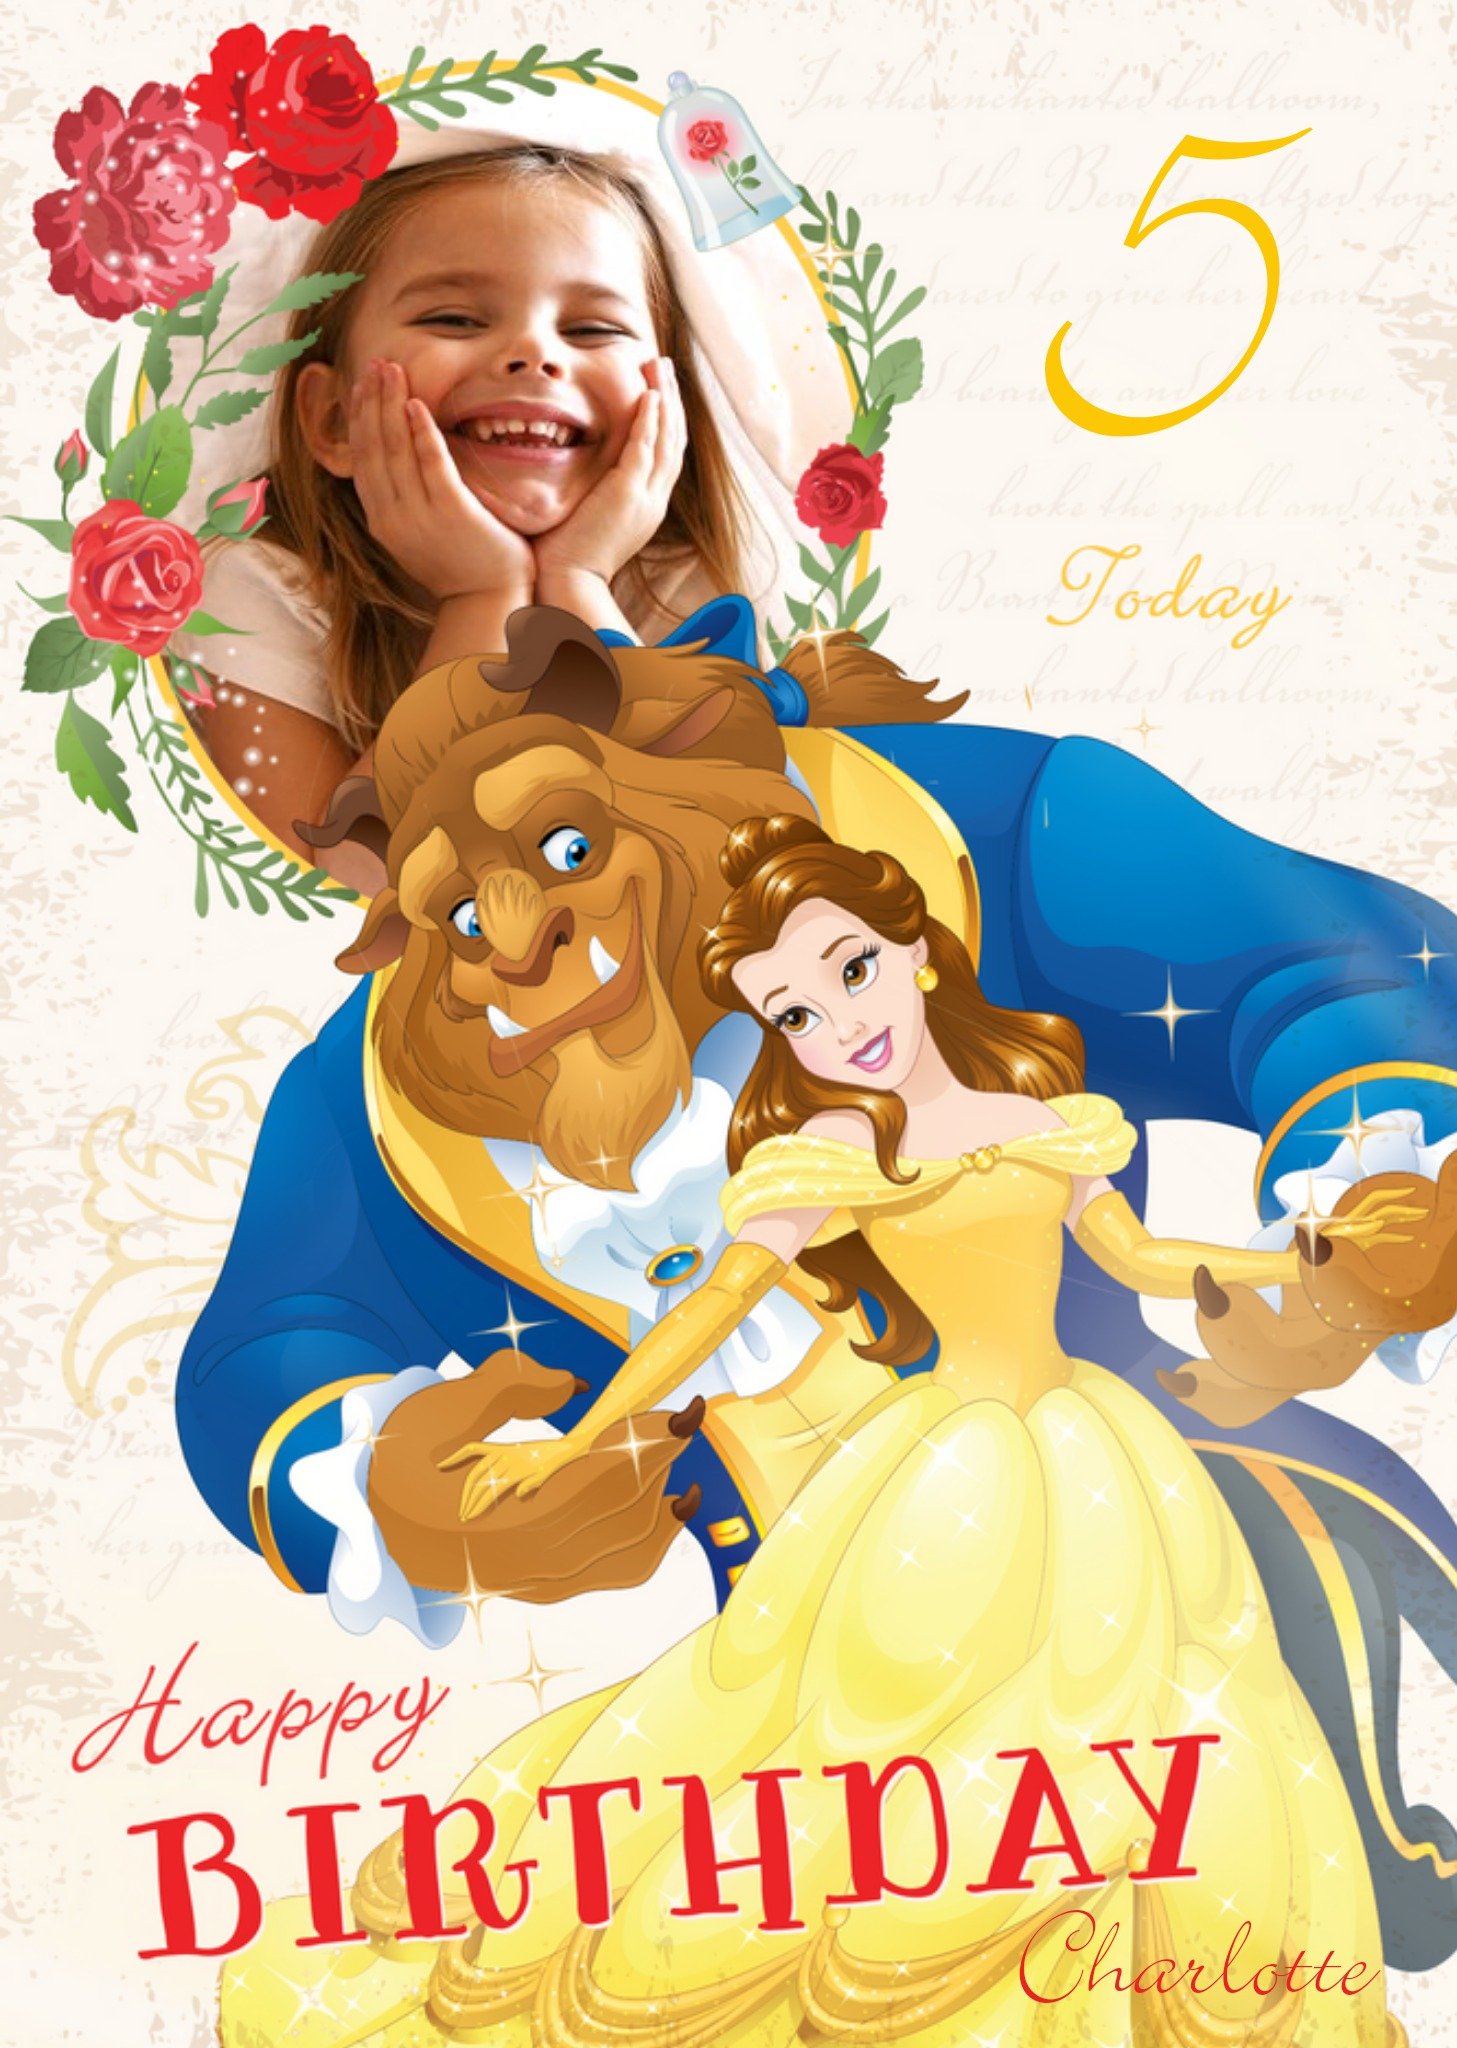 Disney Princesses Disney Beauty And the Beast Happy 5th Birthday Photo Card, Large